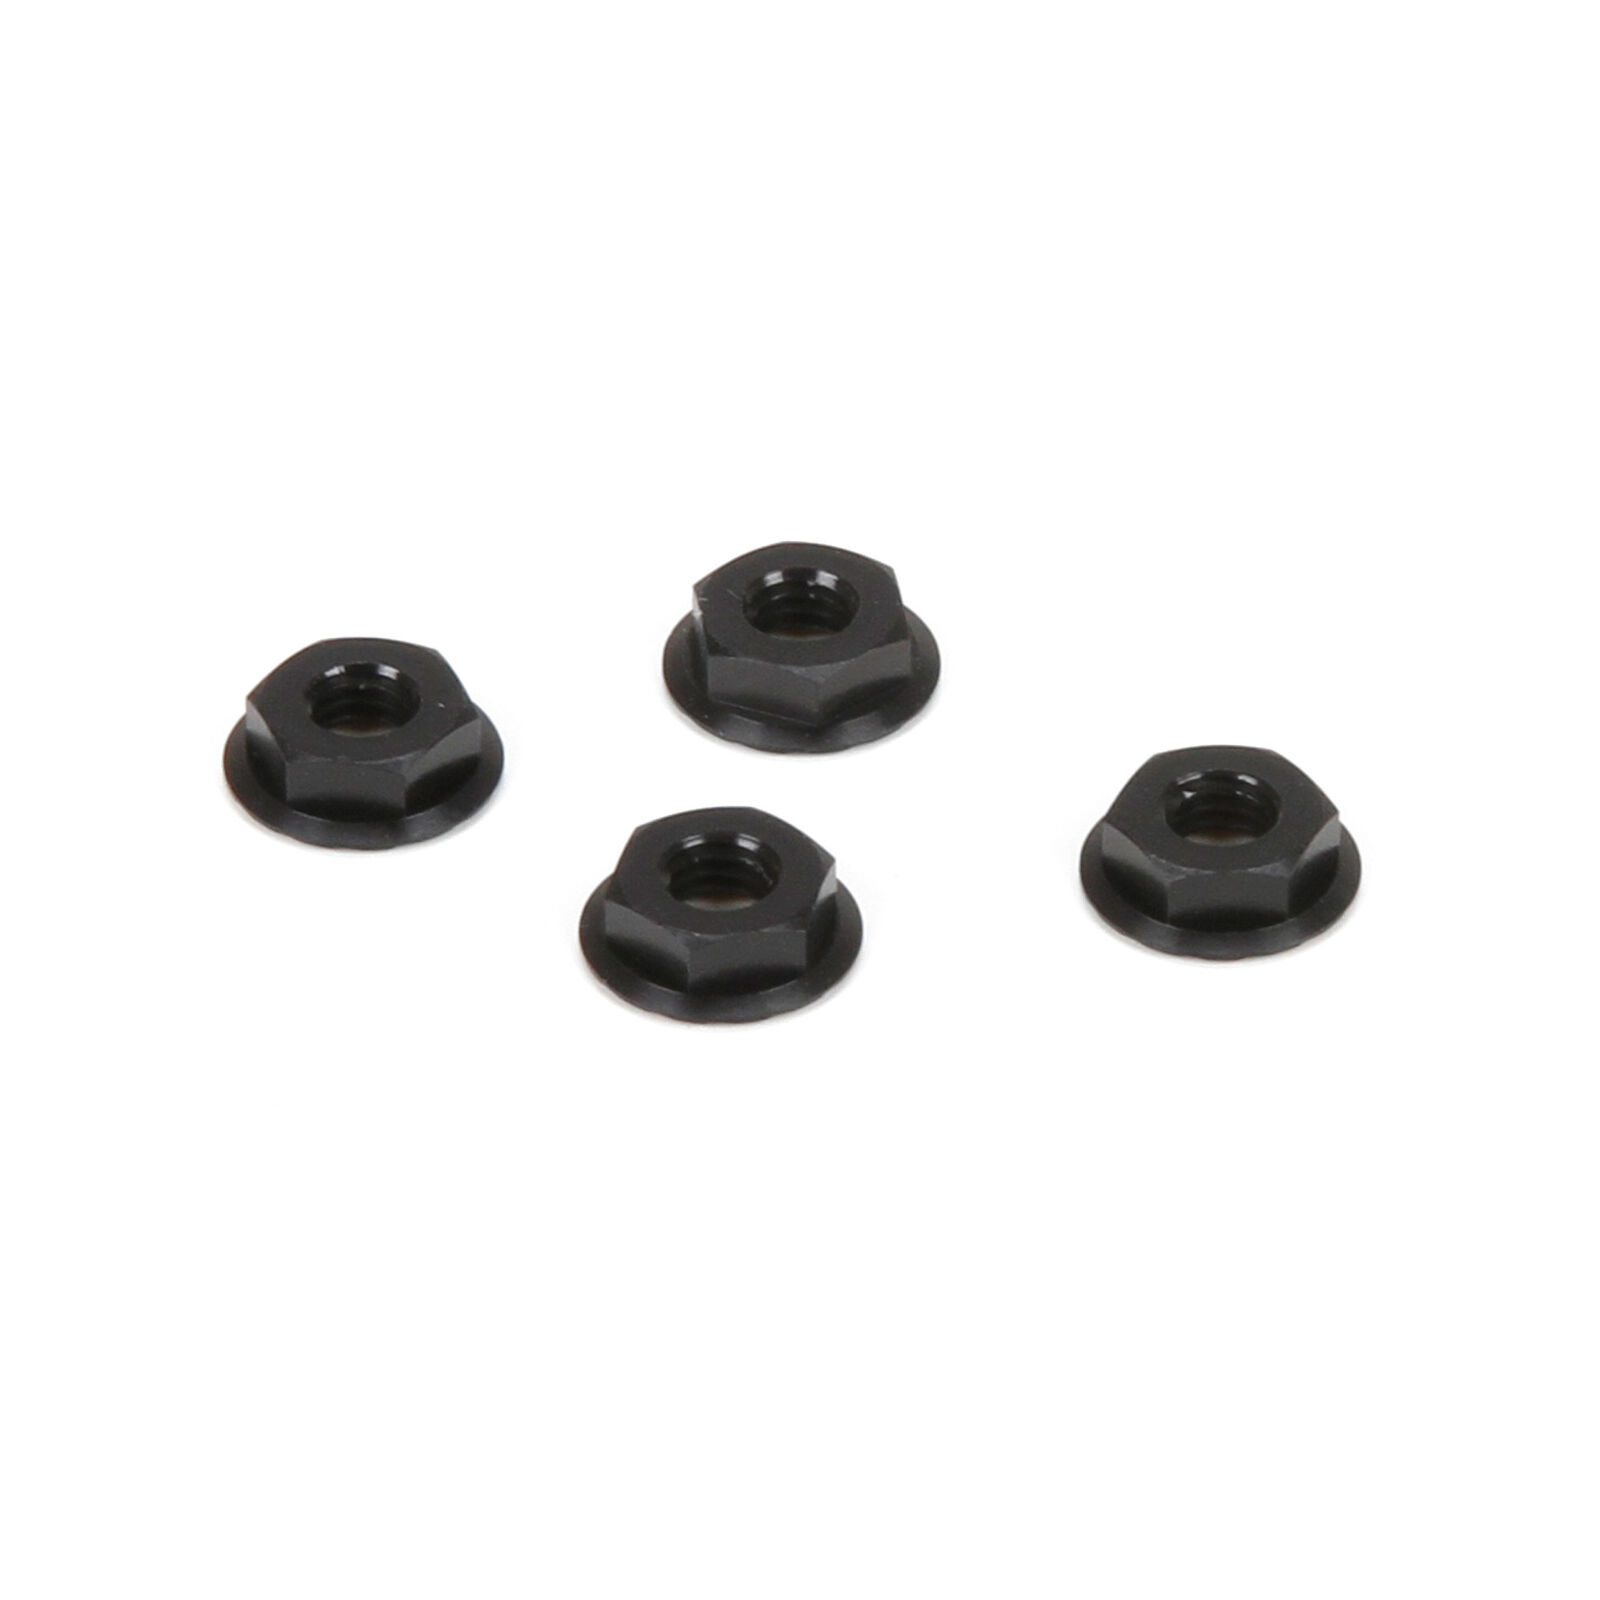 M4 Aluminum Serrated Nuts, Low Profile, Black (4)